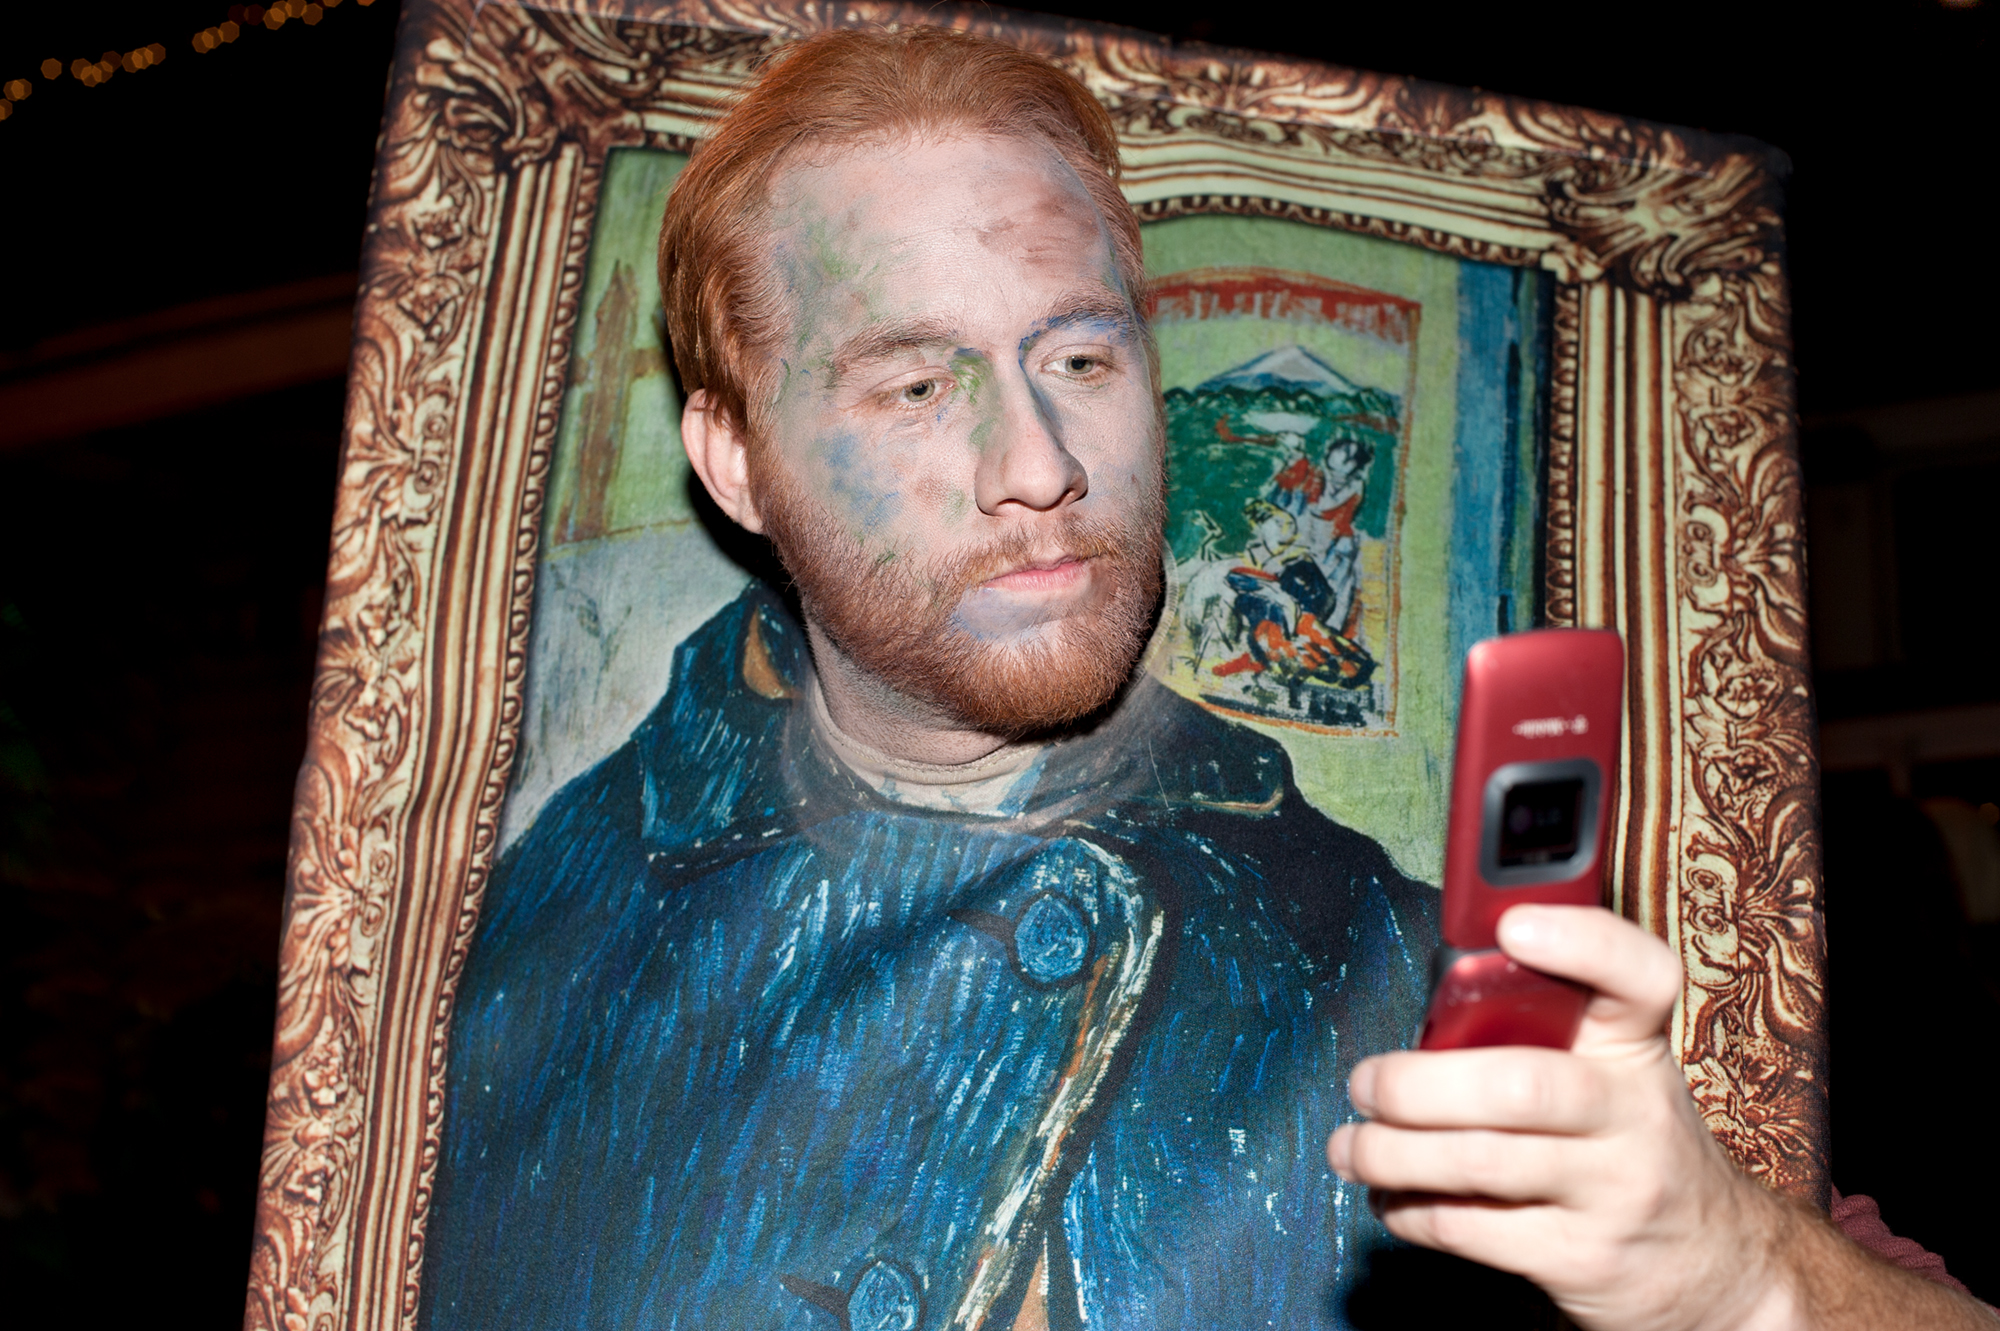 Anita Nowacka portrait of a man posing as Vincent van Gogh